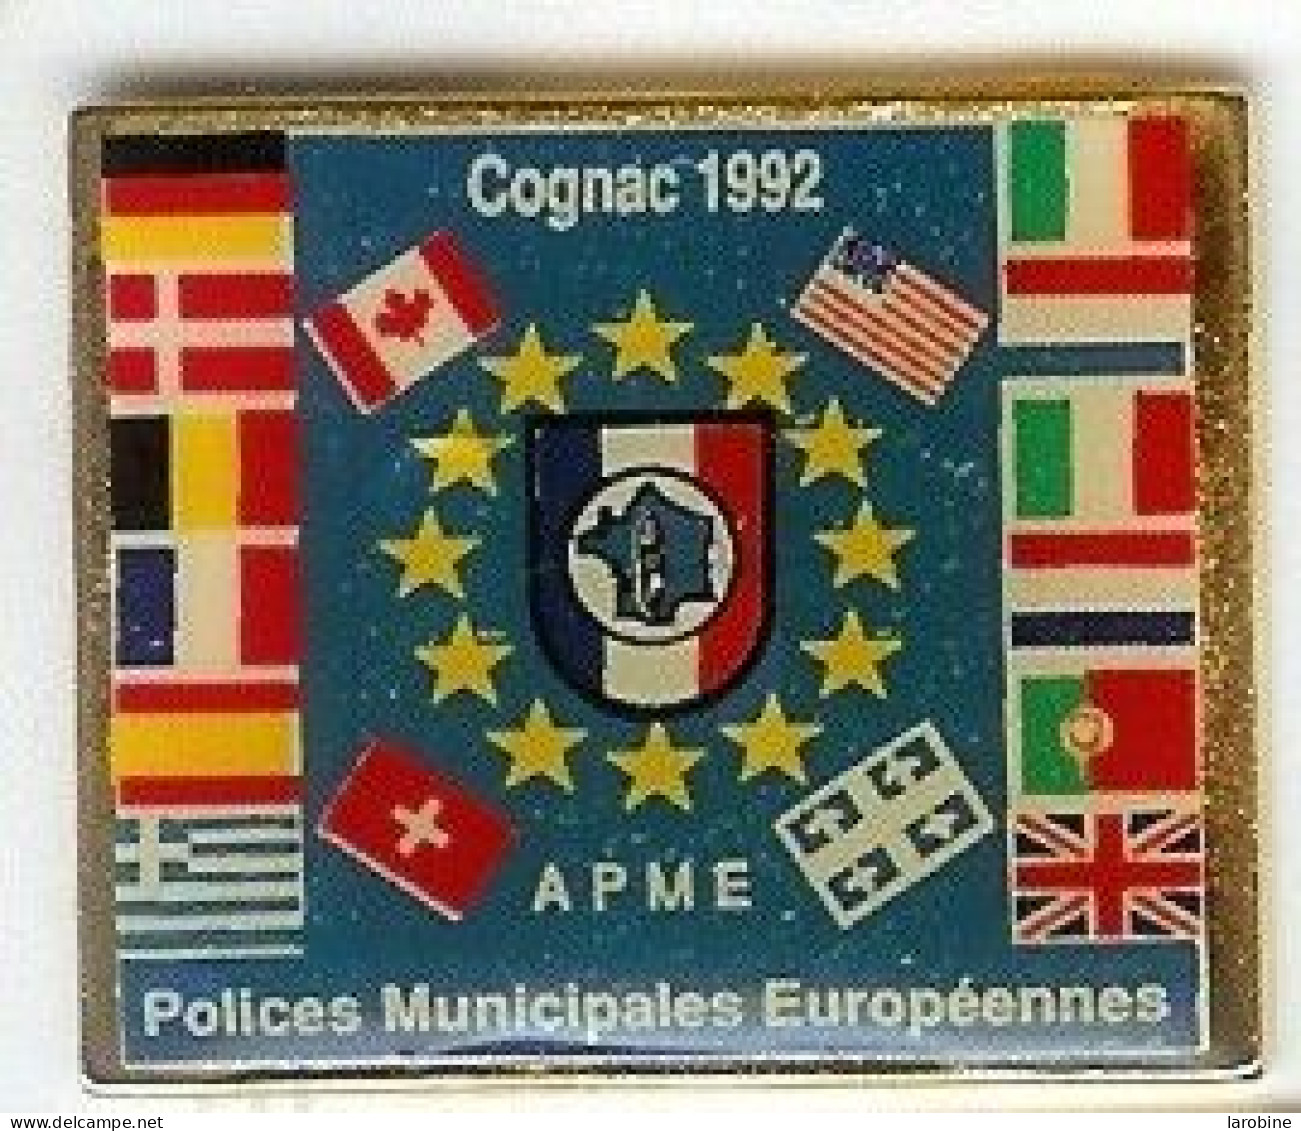 @@ COGNAC Polices Municipales Européennes APME 1992 (3x2.5) @@pol92b - Policia